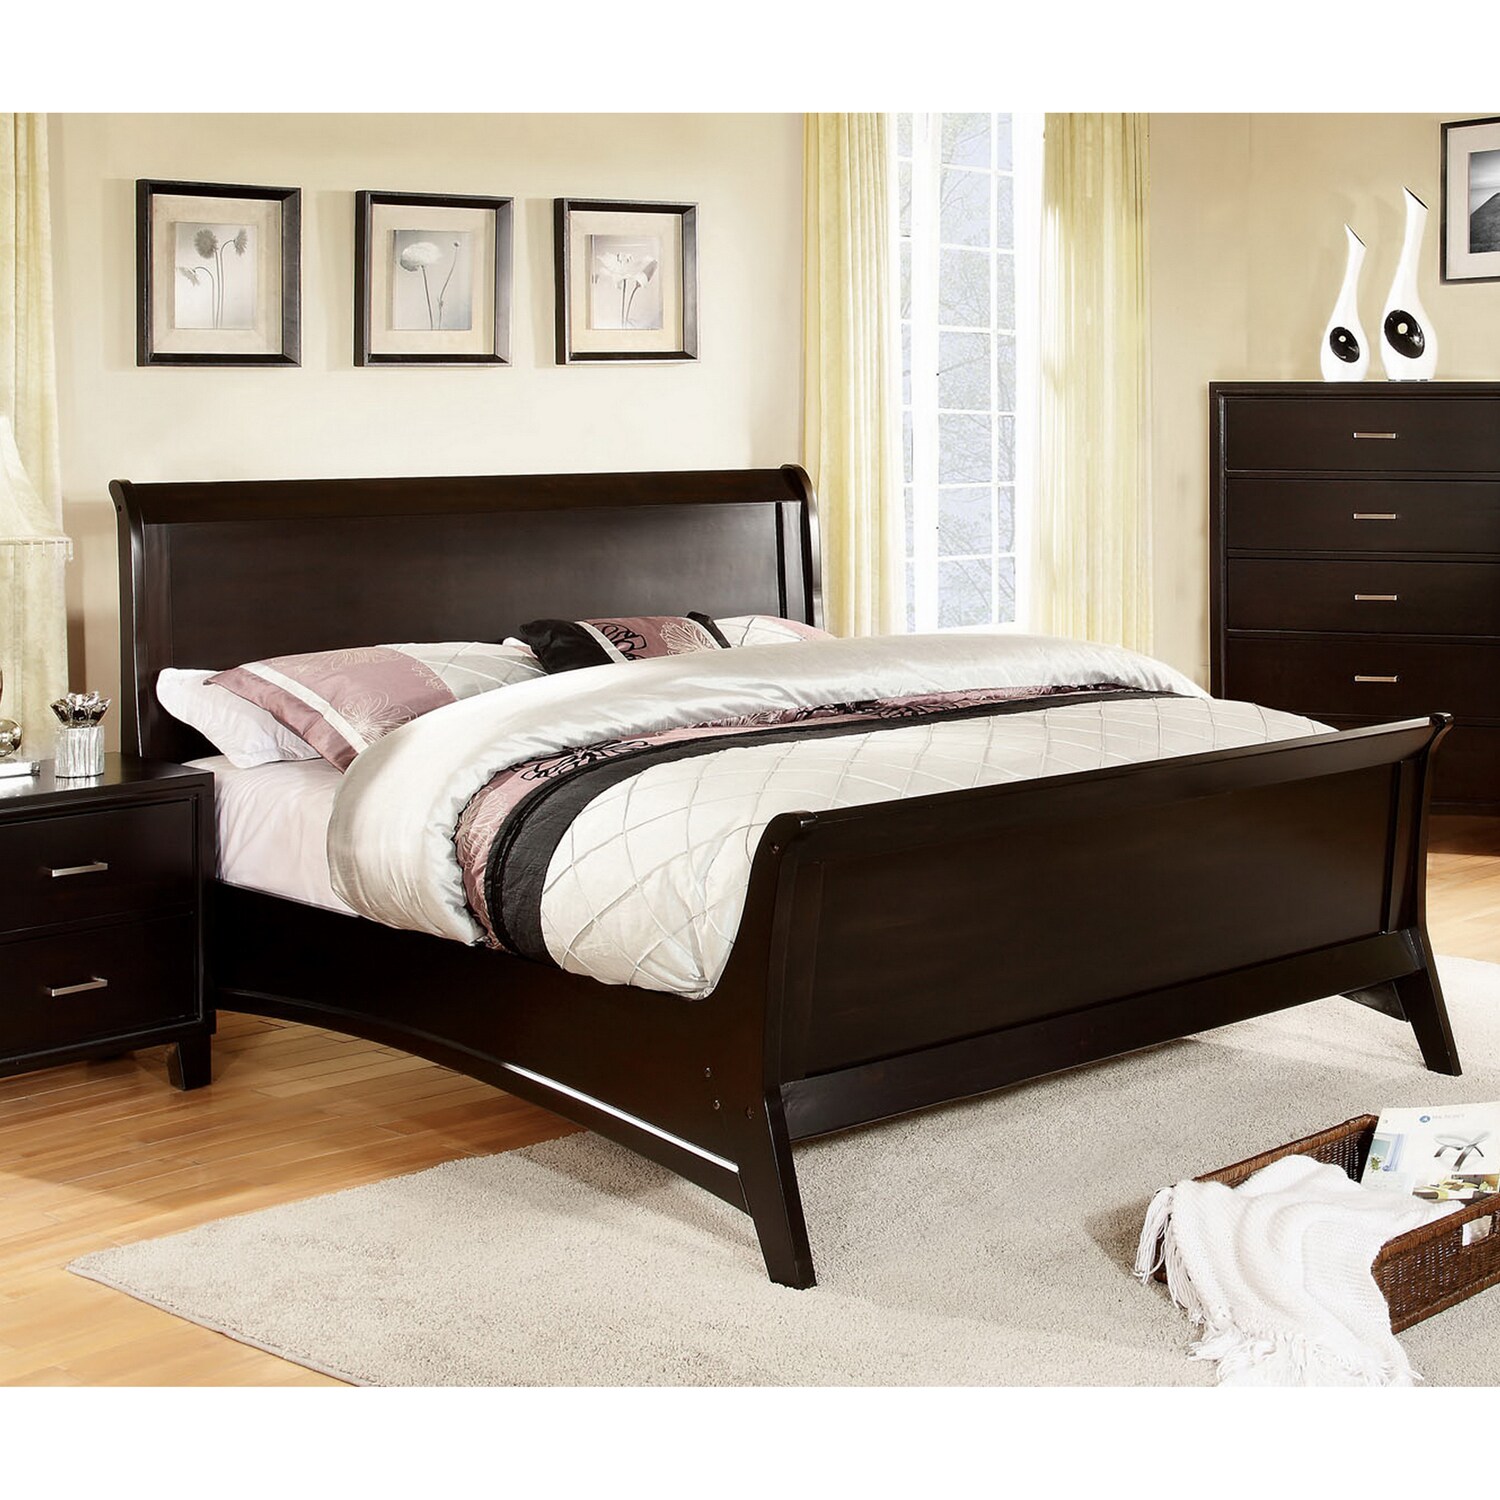 Furniture Of America Vornado Contemporary Espresso Sleigh Bed